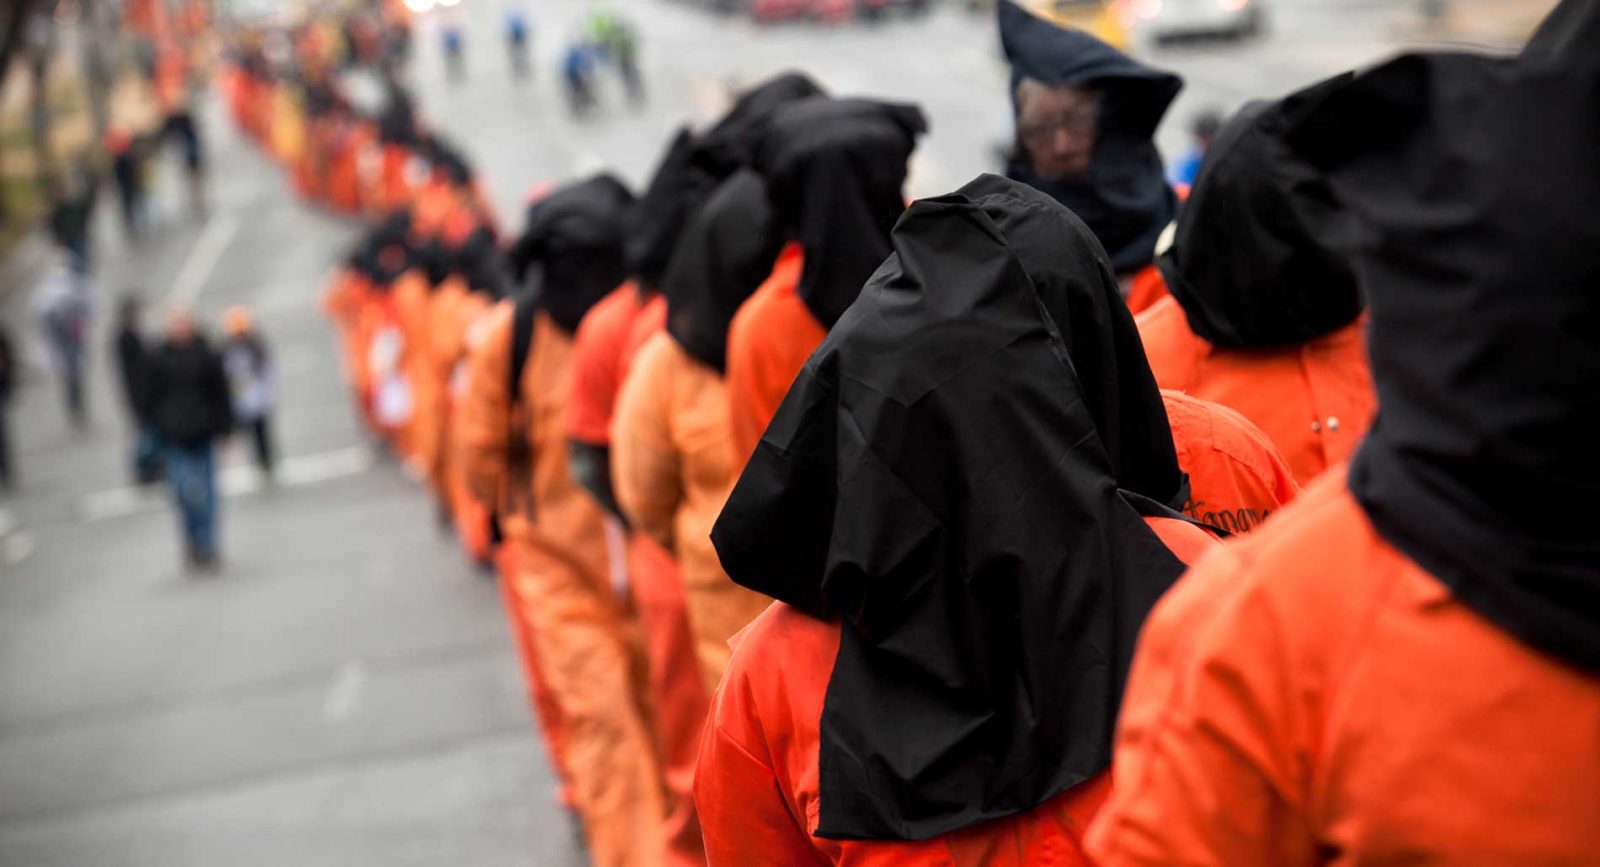 Amnesty International USA activists protest the Guantanamo Bay detention centre in Washington DC.